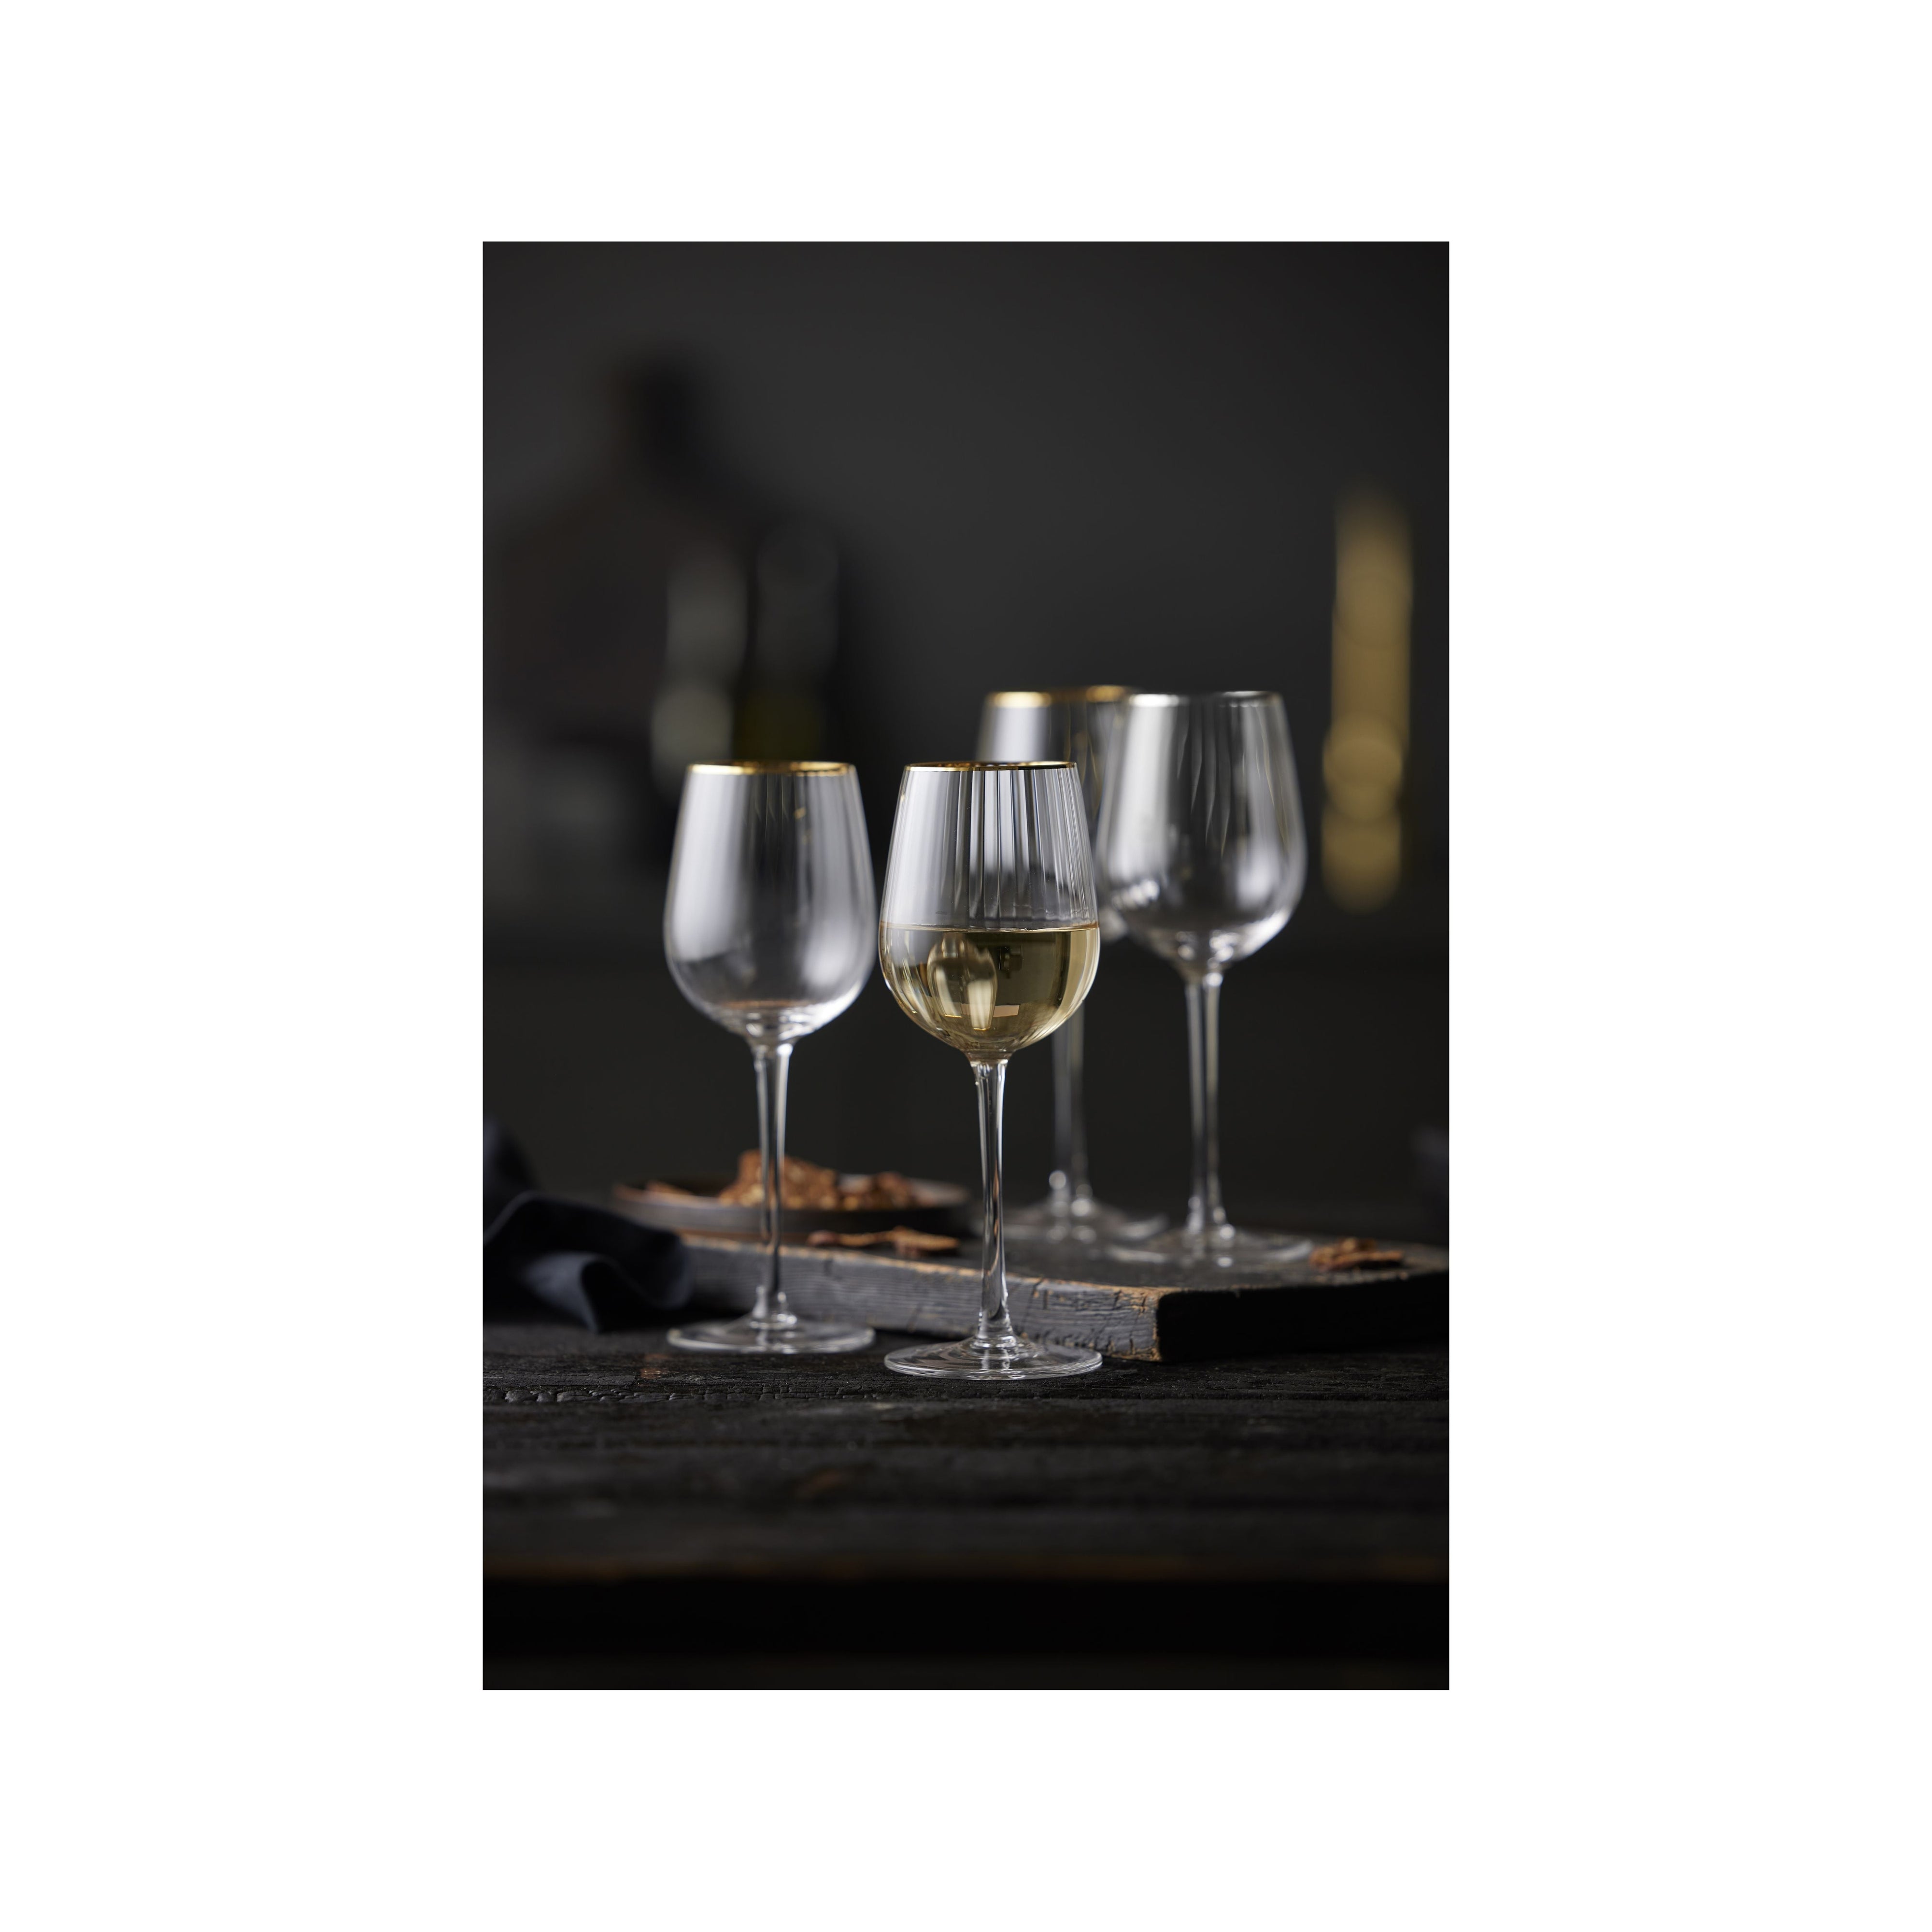 Lyngby Glas Palermo Gold White Wine Glass 30 Cl 4 Pcs.